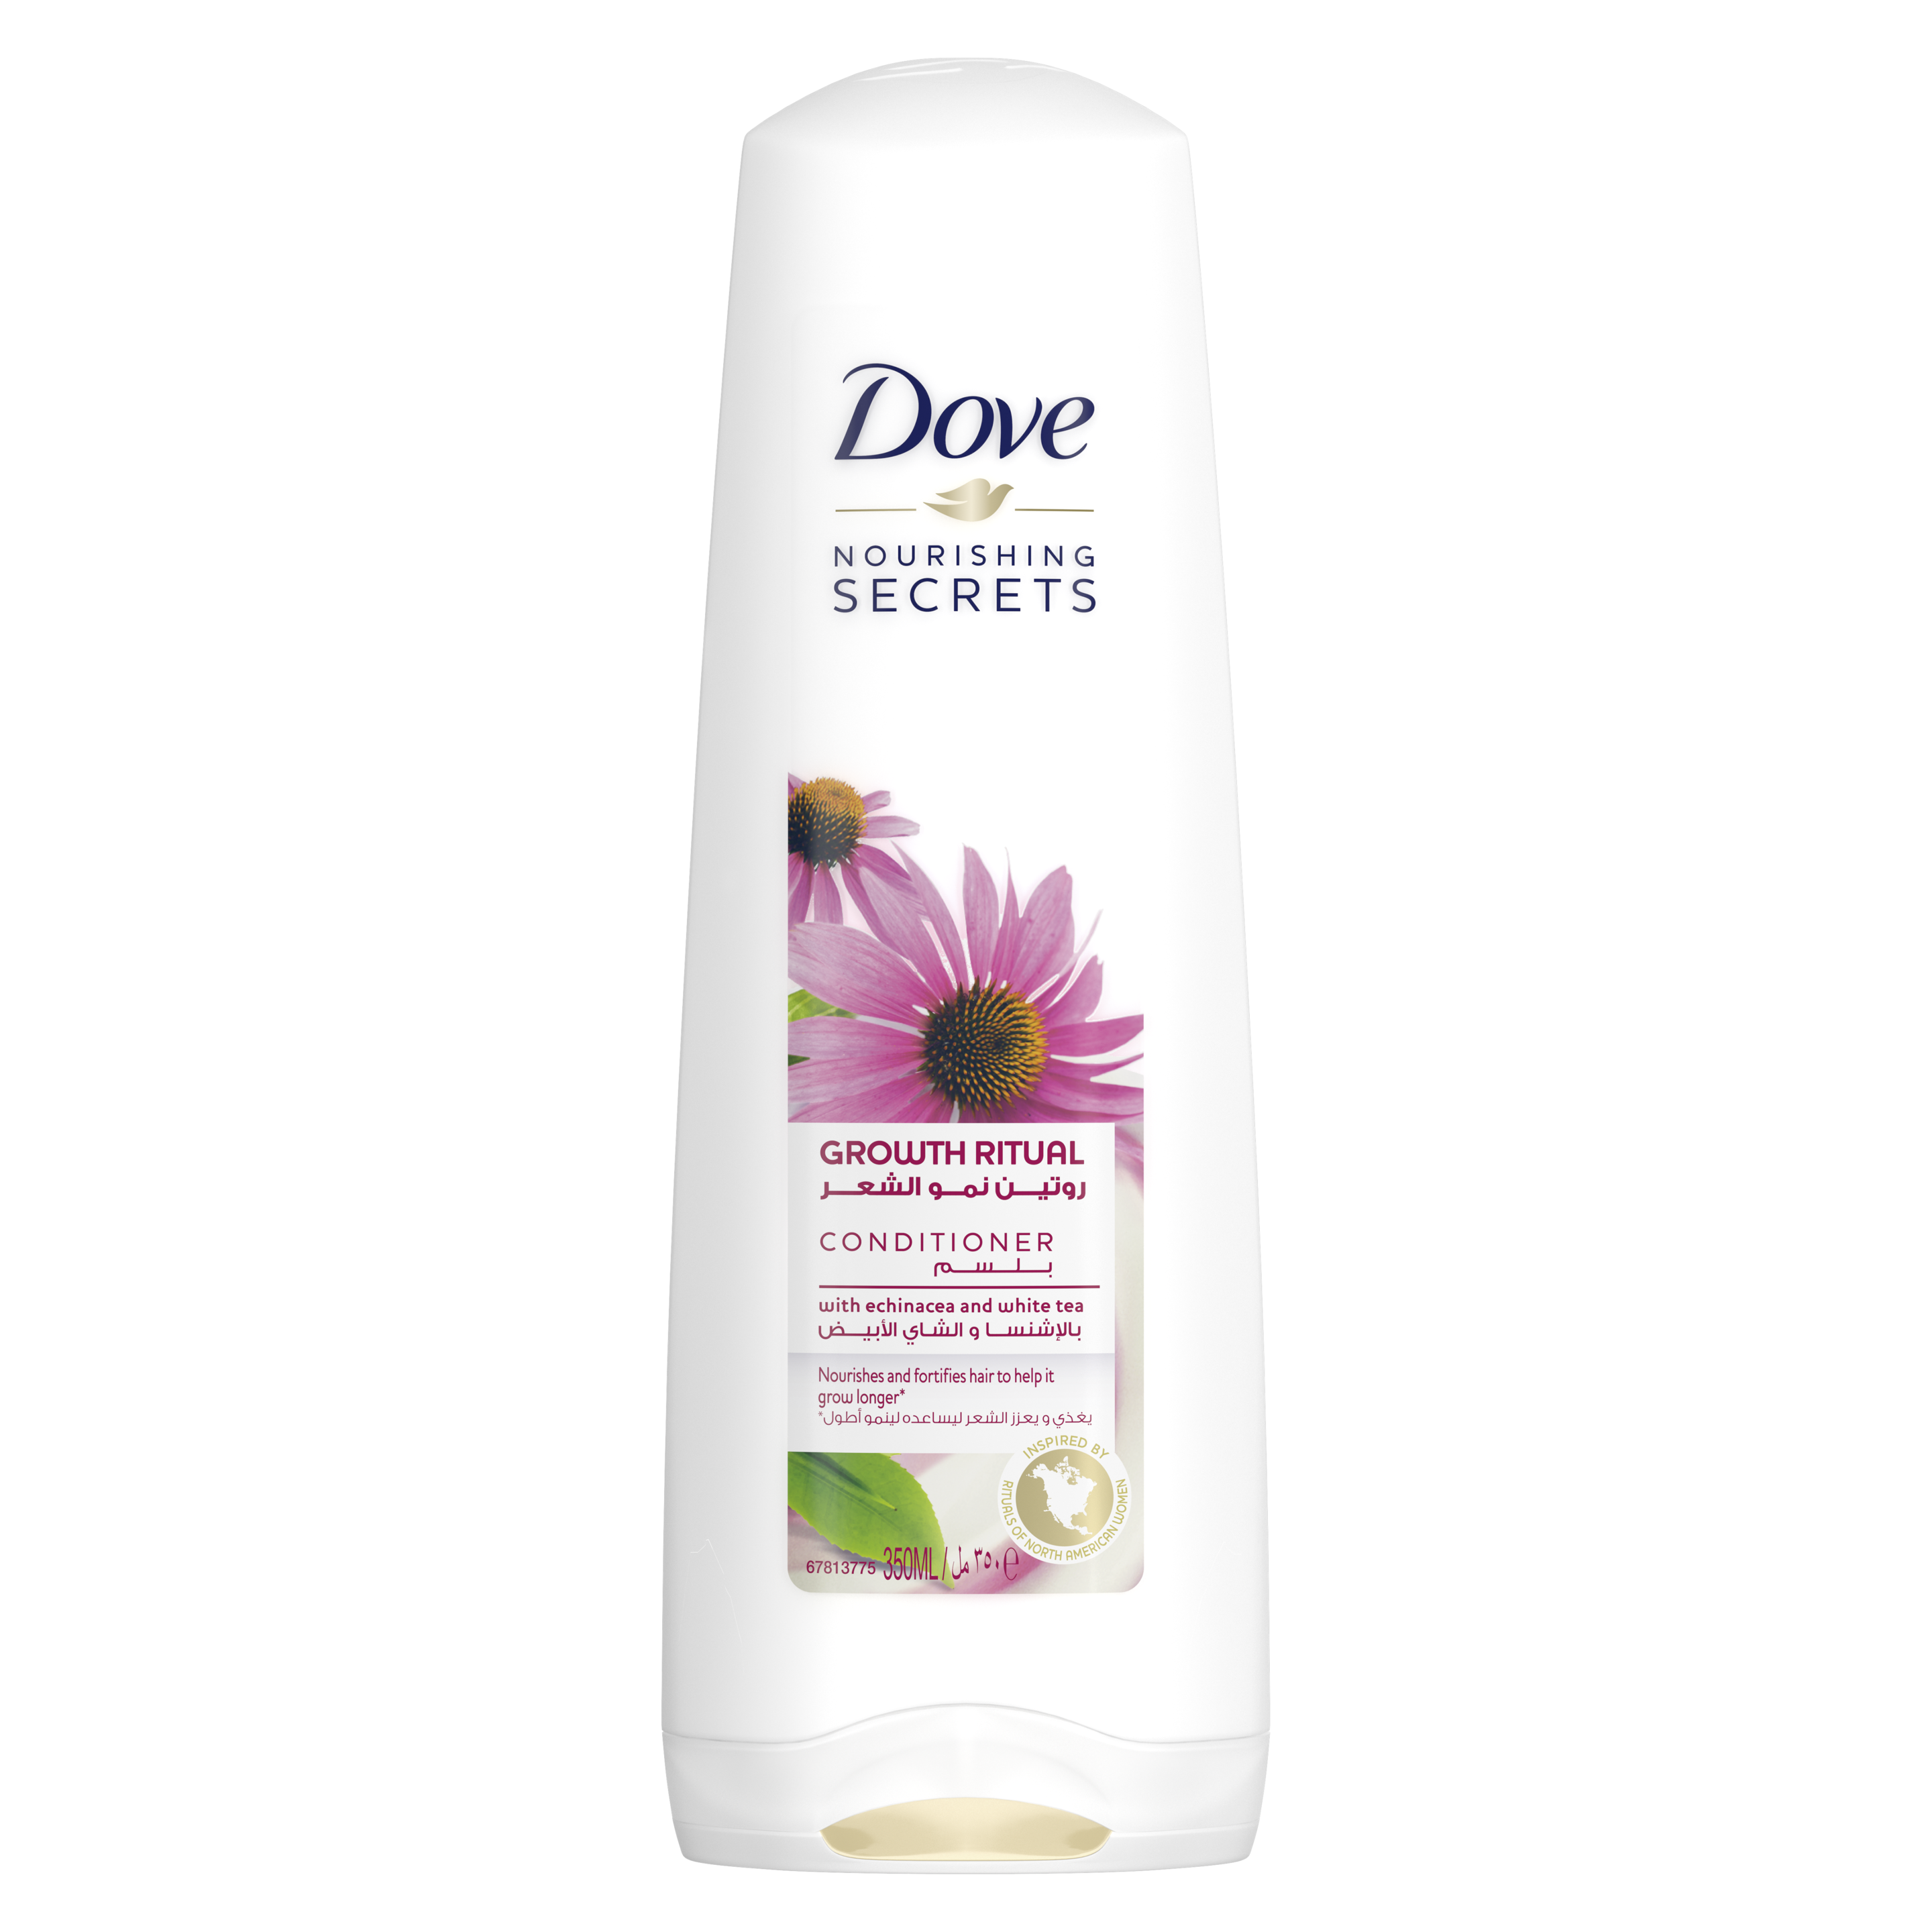 Dove Nourishing Secrets Conditioner Growth Ritual - Echinacea and White Tea 350ml